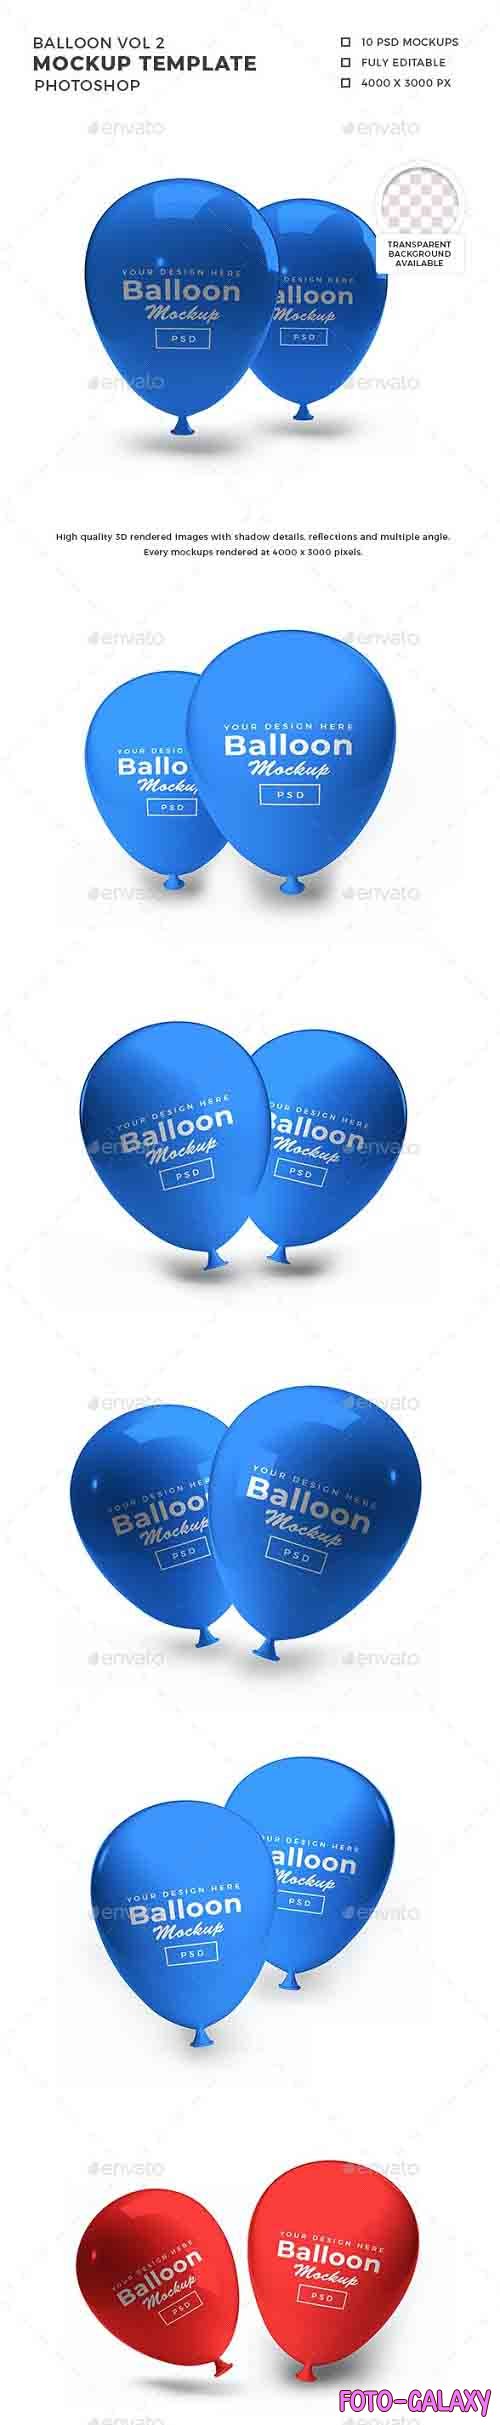 Balloon 3D Mockup Template Vol 2 - 32380478 - 1393201